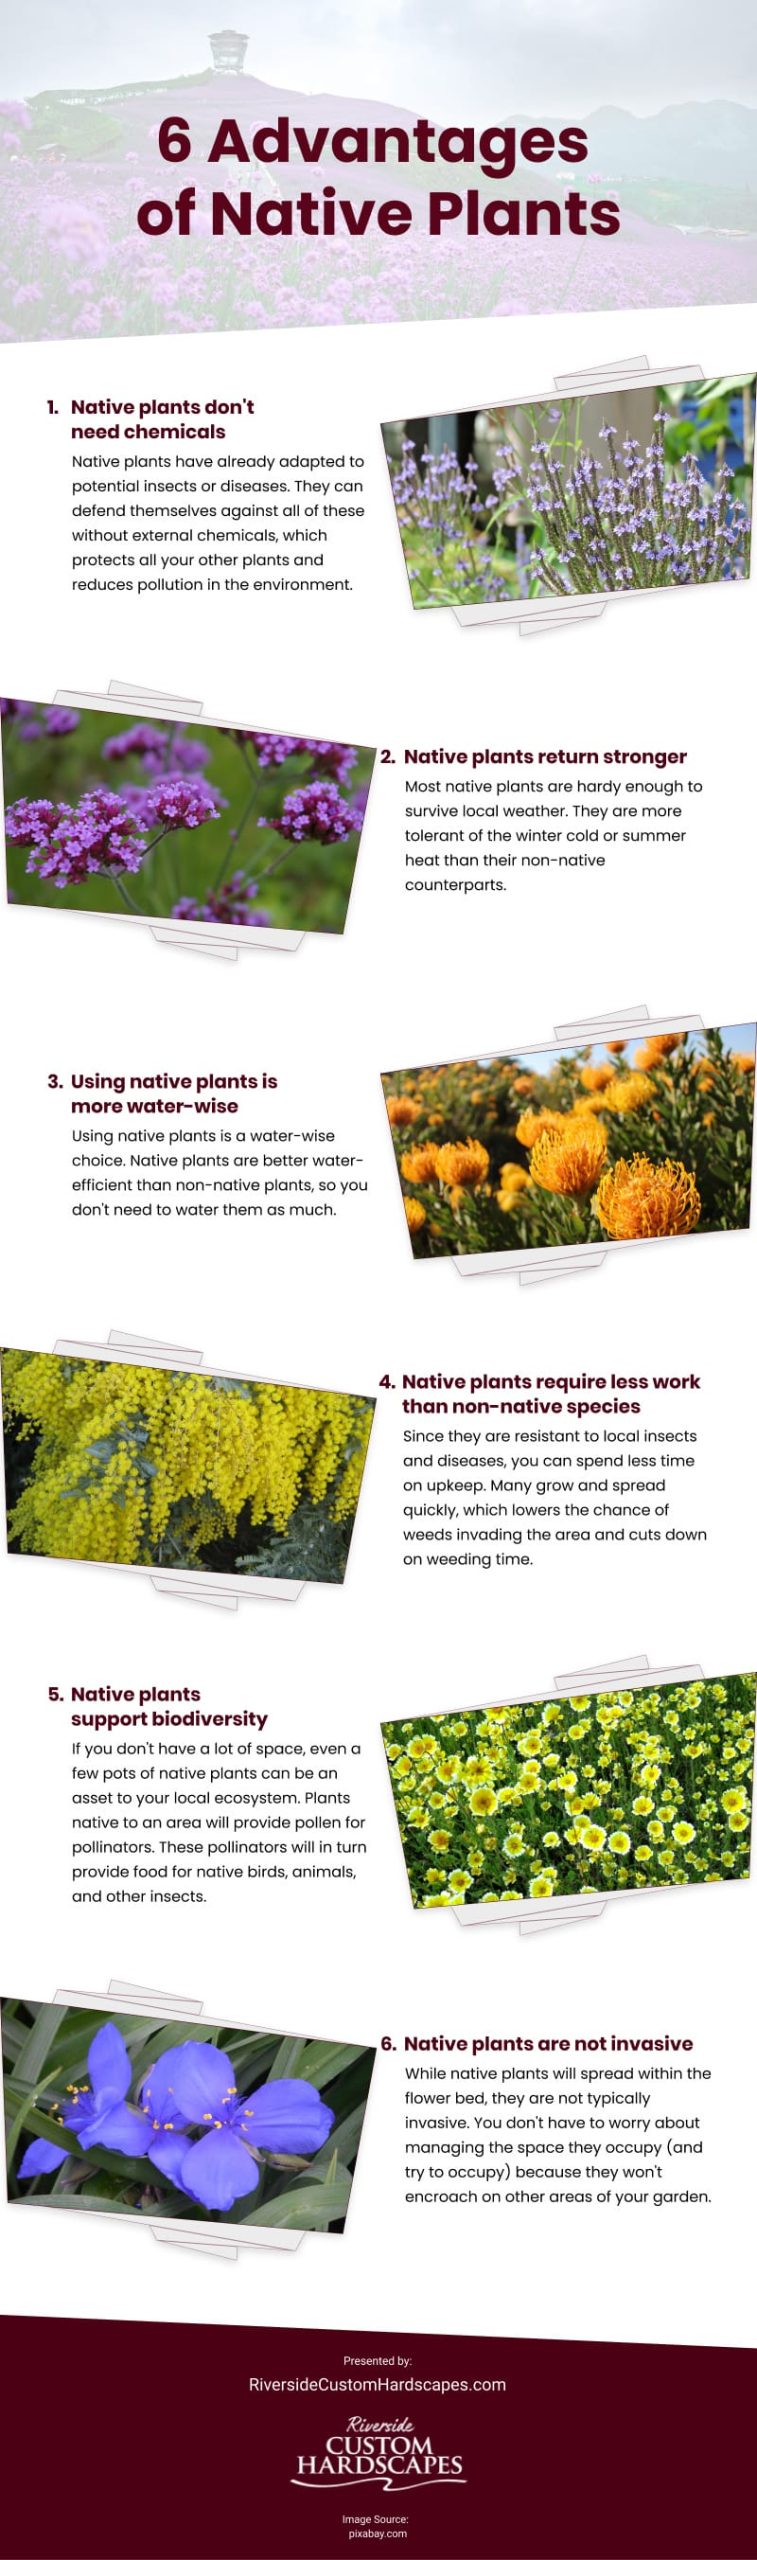 6 Advantages of Native Plants Infographic